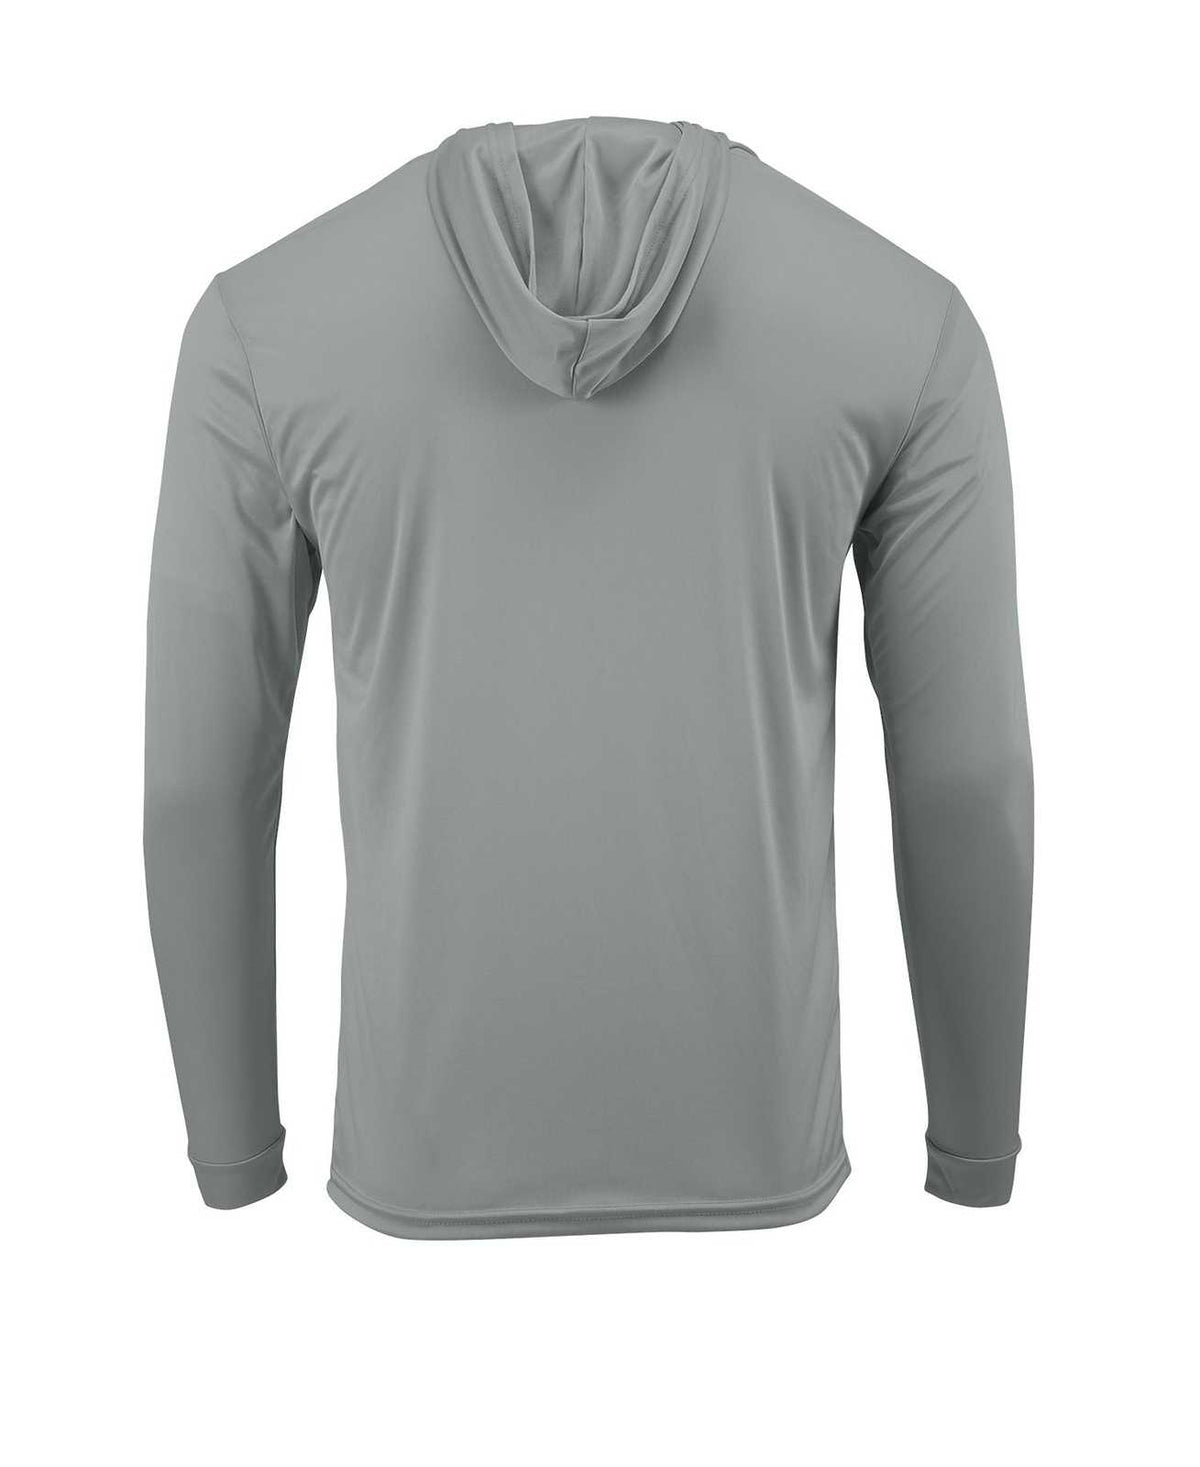 Paragon 220 Adult Long Sleeve Performance Hood - Medium Gray - HIT a Double